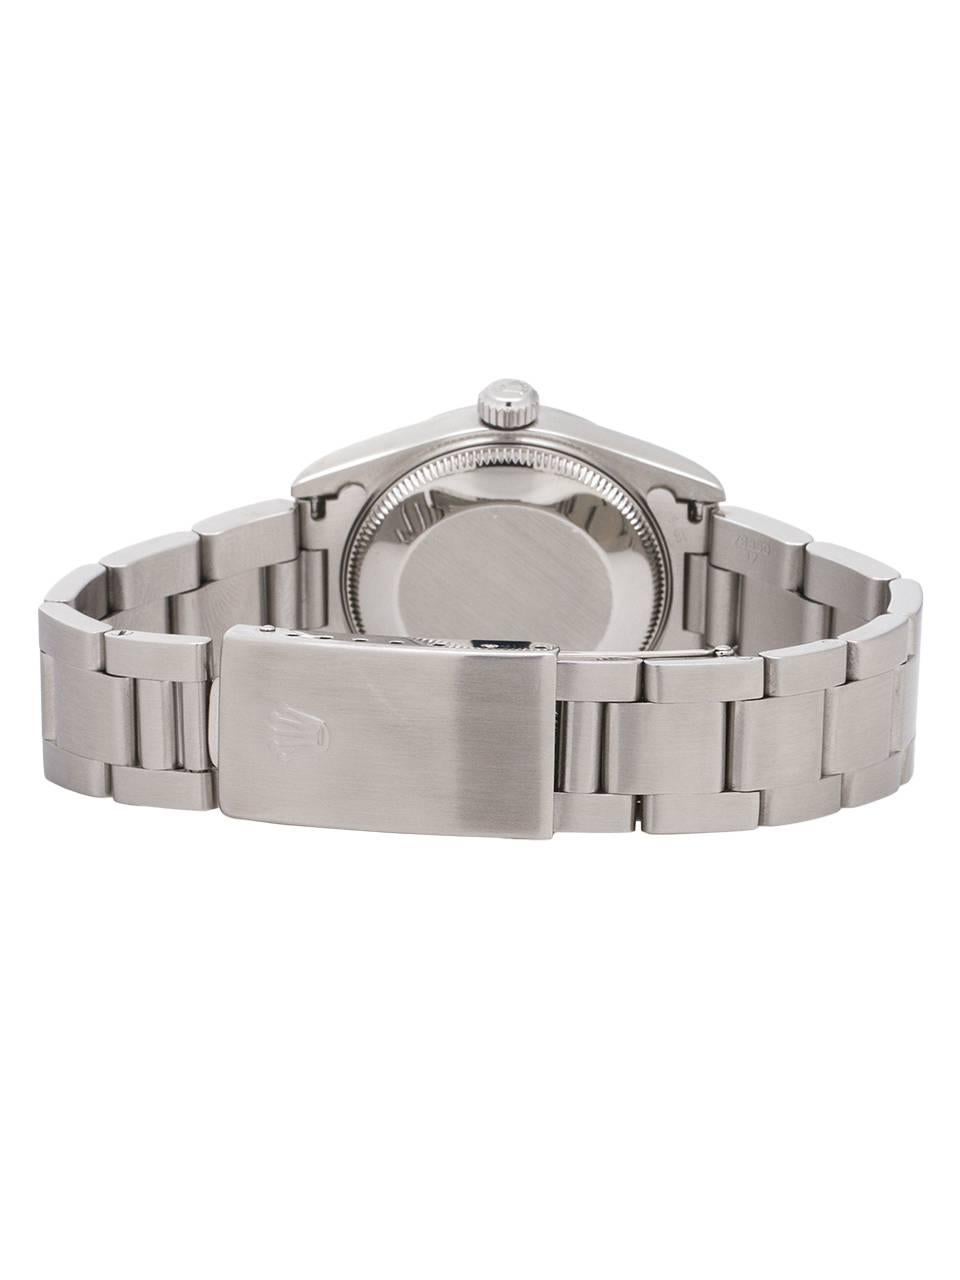 Women's or Men's Rolex Stainless Steel Oyster Perpetual self winding wristwatch Ref 67480, c1996